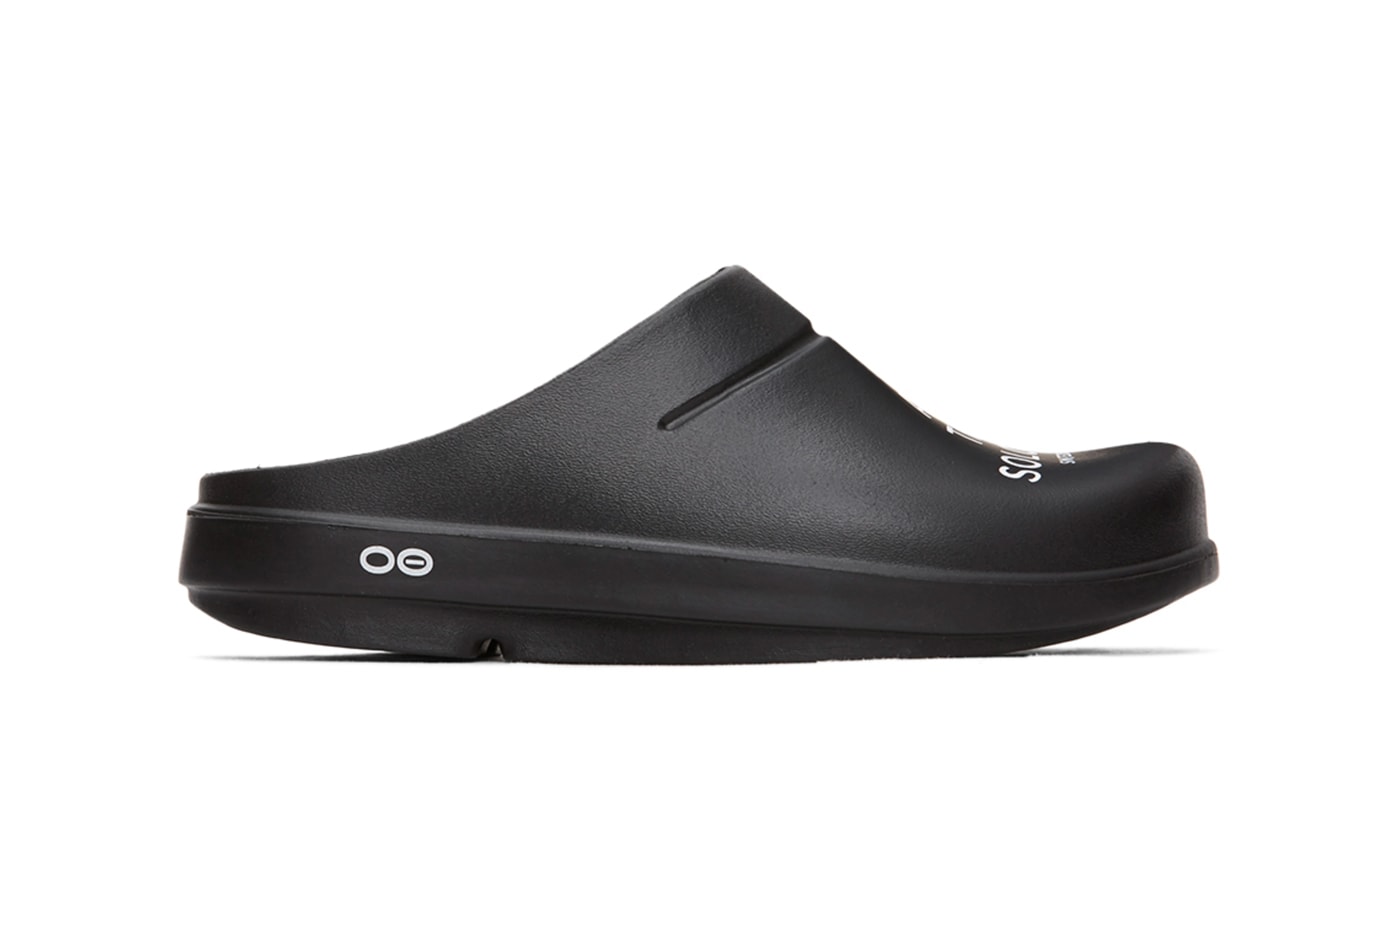 TAKAHIROMIYASHITATheSoloist OOFOS Edition OOcloog Loafers Flip Flops slides menswear streetwear spring summer 2020 collection kicks sandals